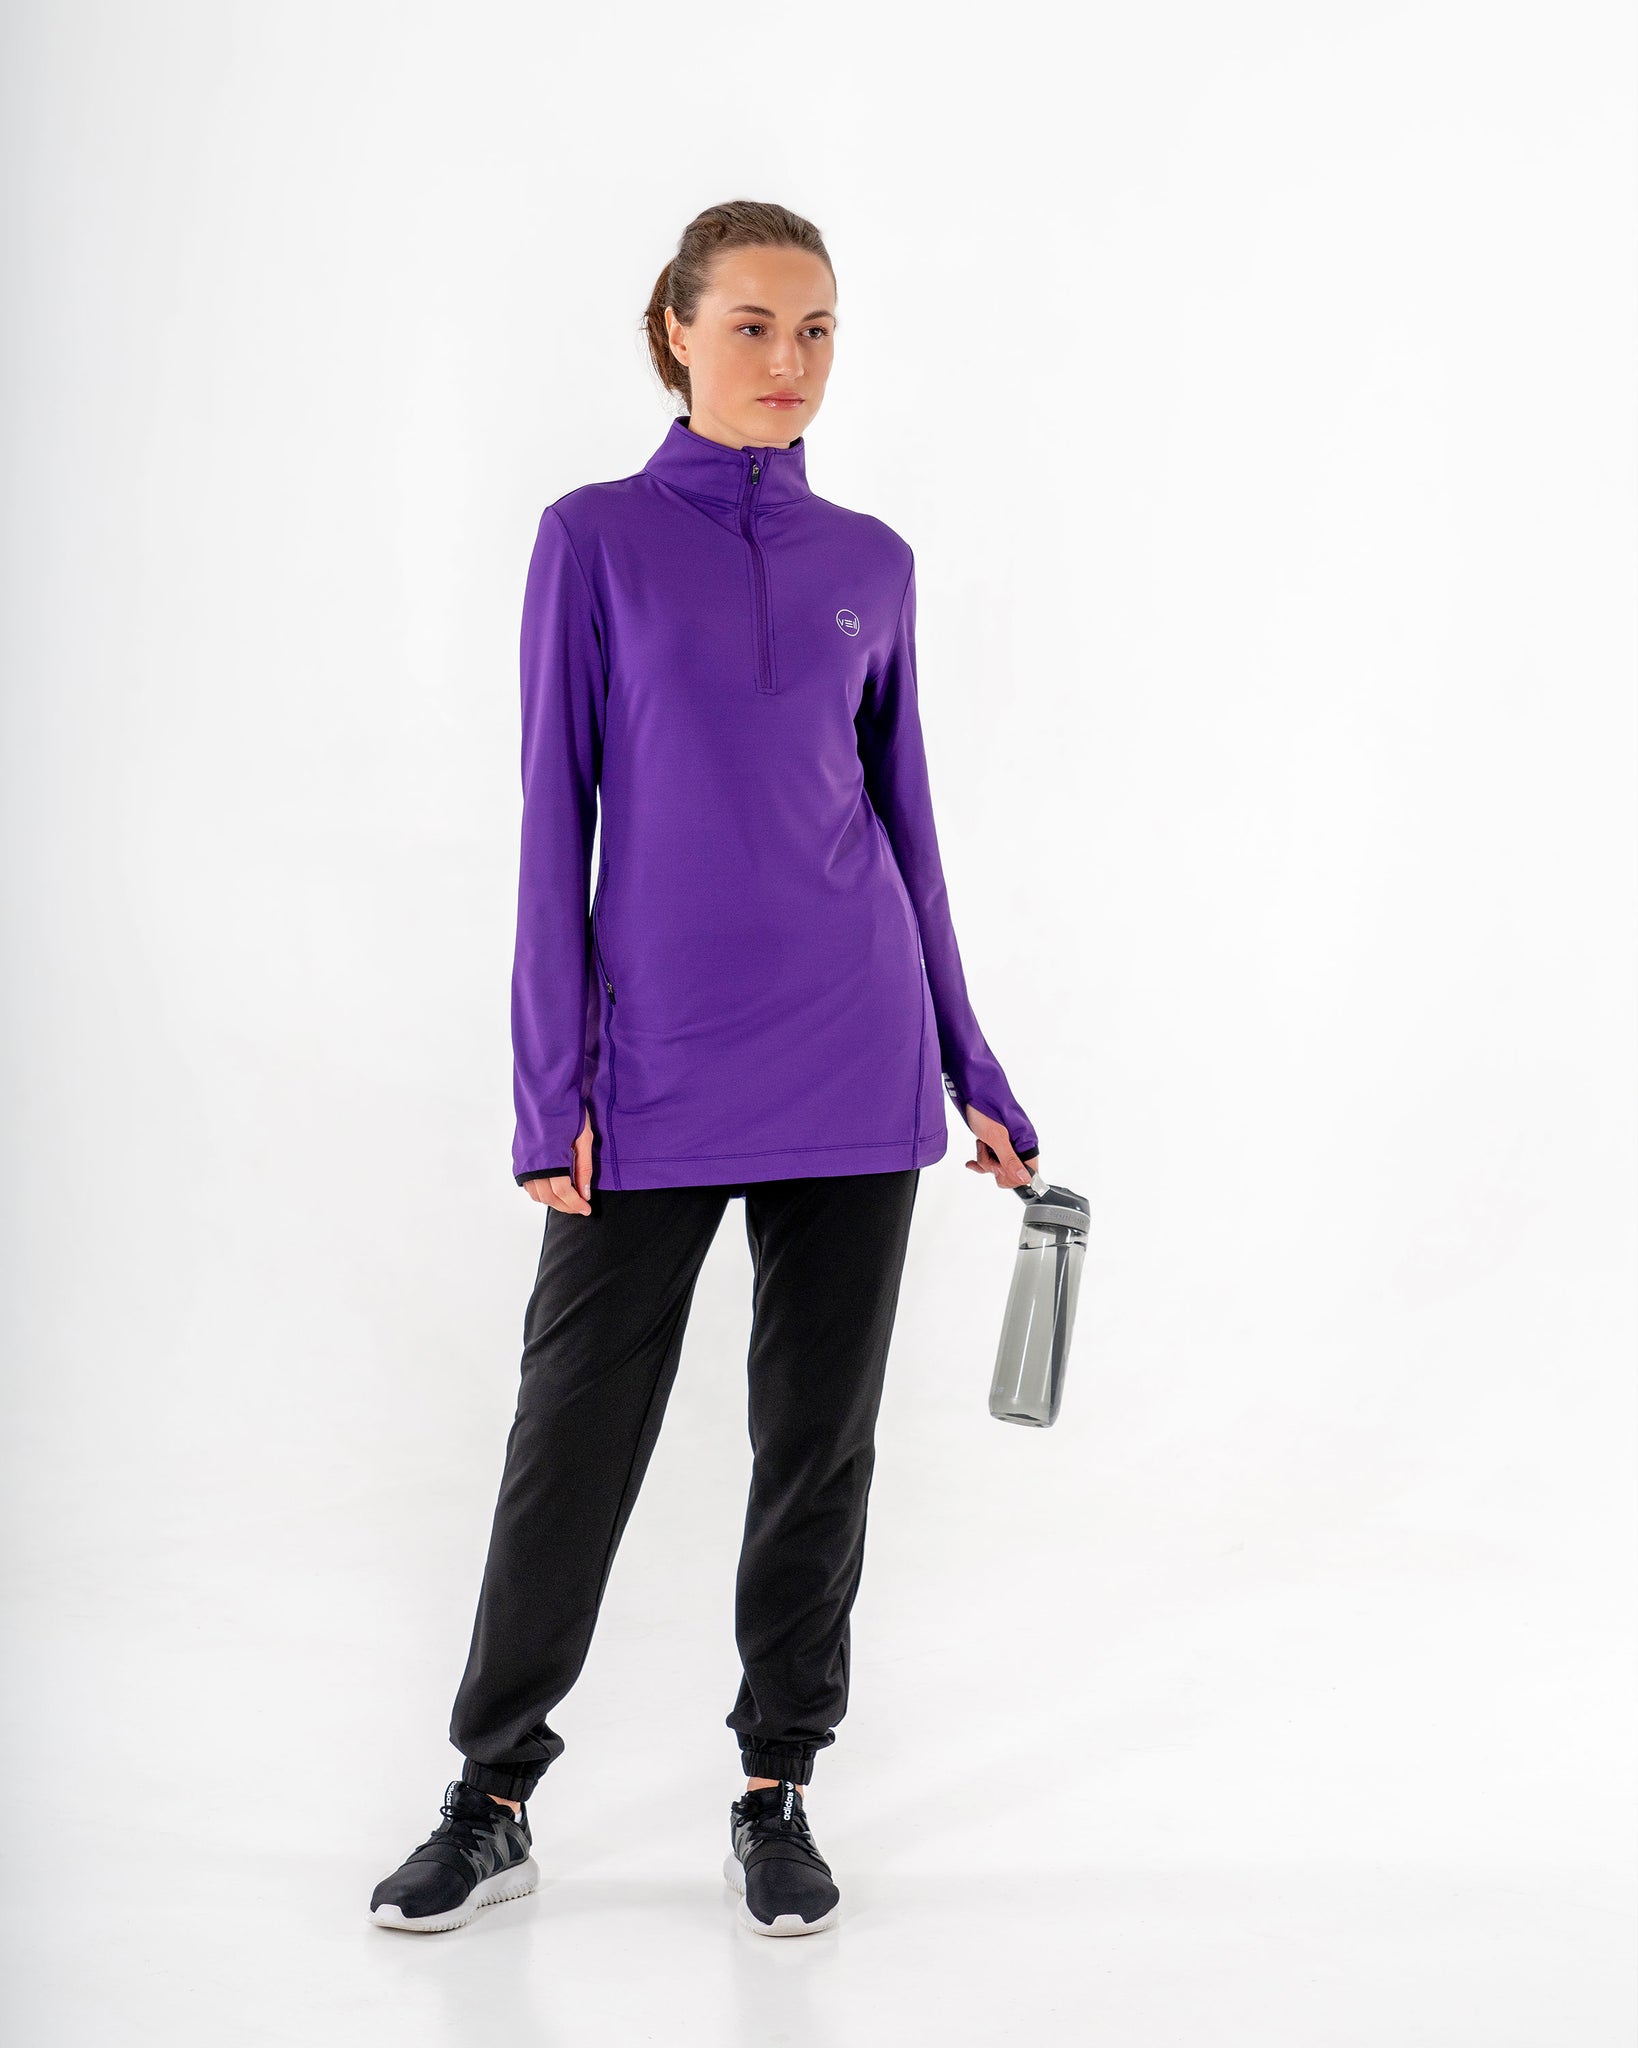 Spark Half-Zip in purple by Veil Garments. Modest activewear collection.